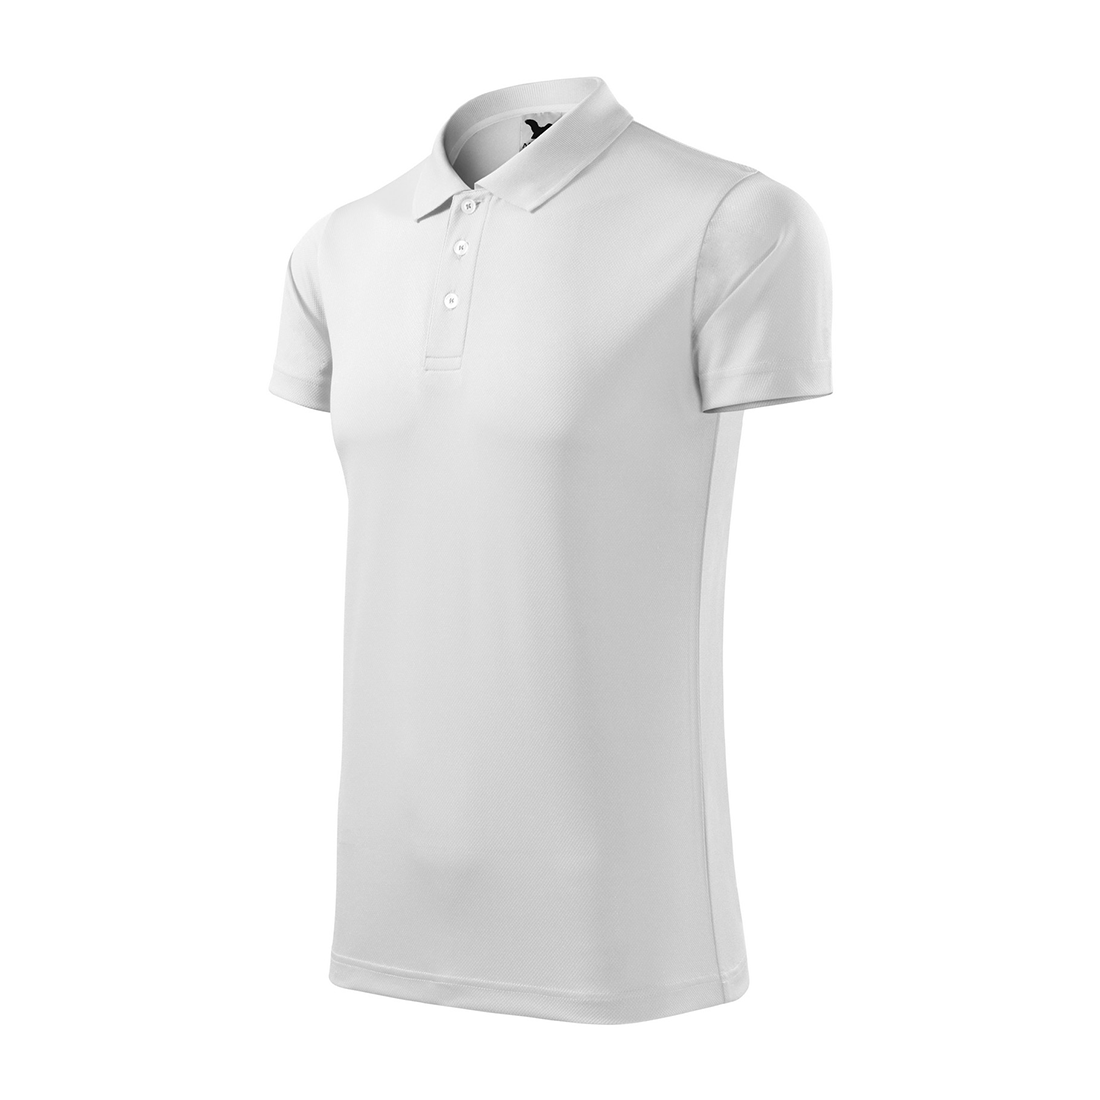 Unisex Polo Shirt - Safetywear